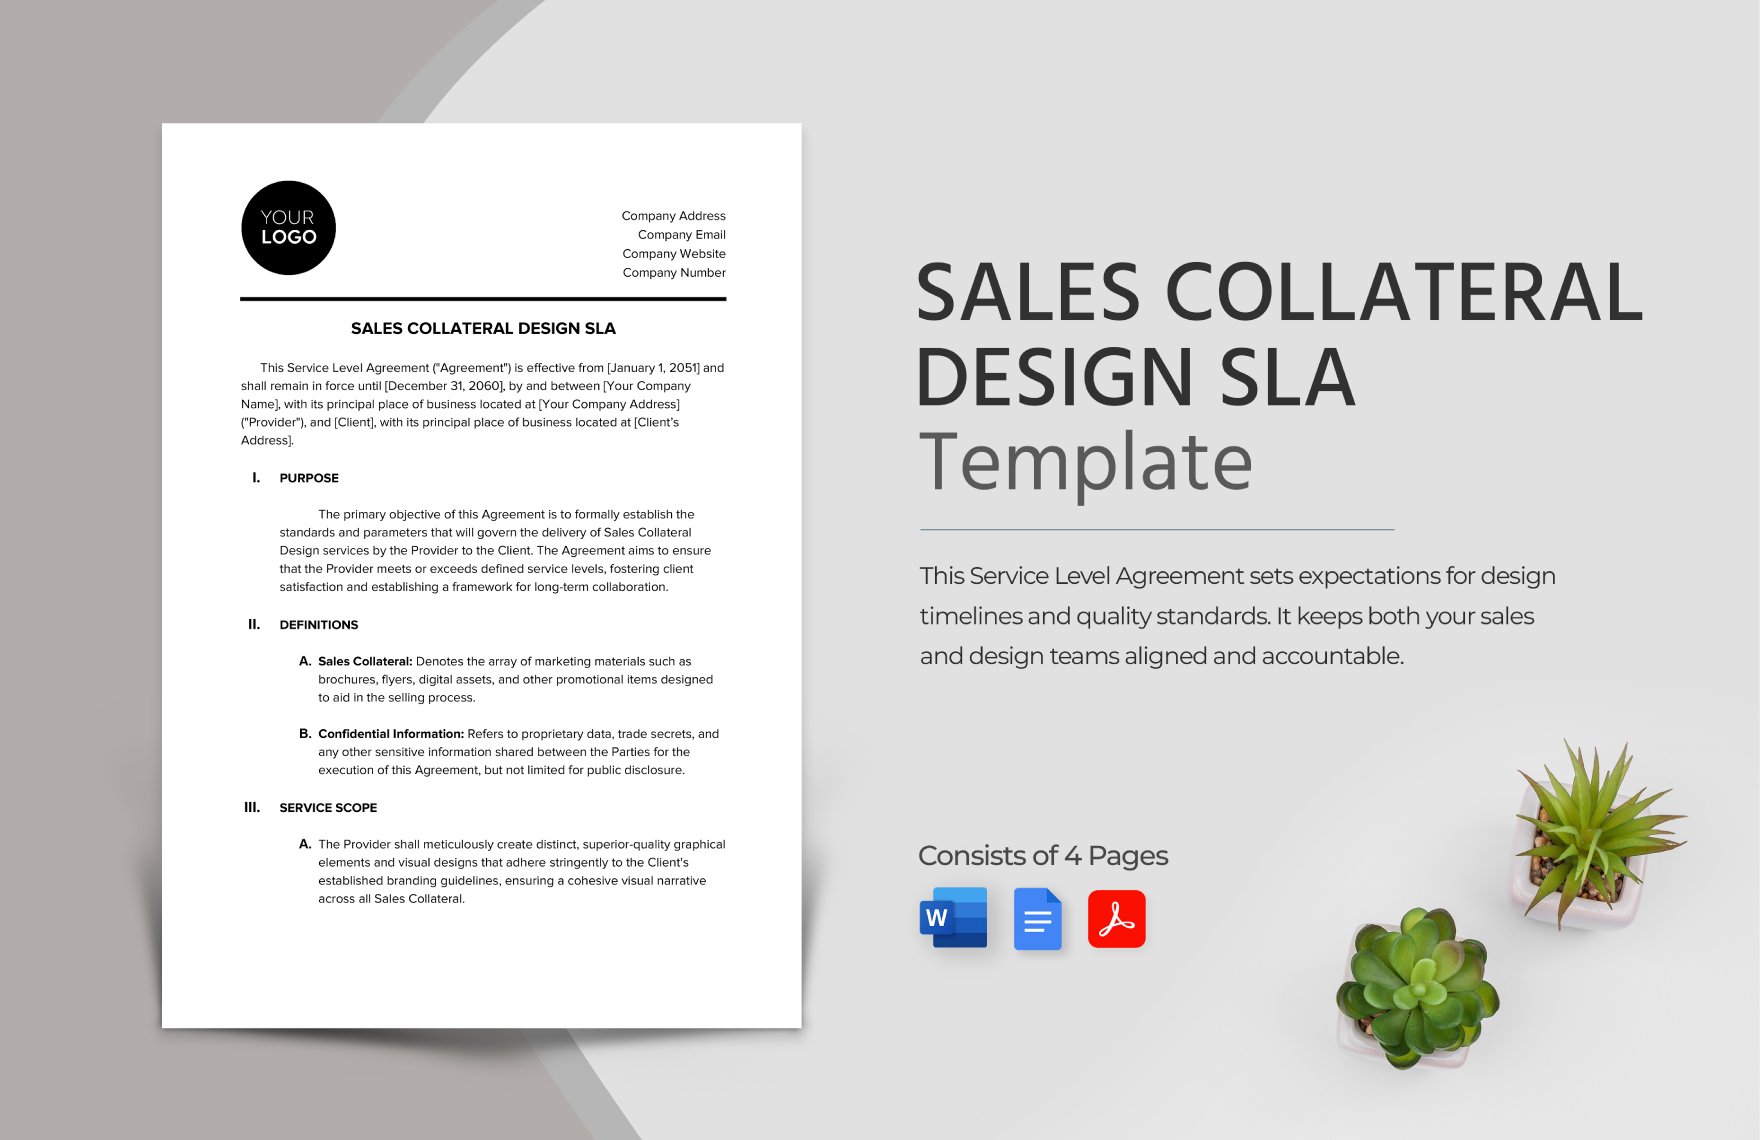 Sales Collateral Design SLA Template